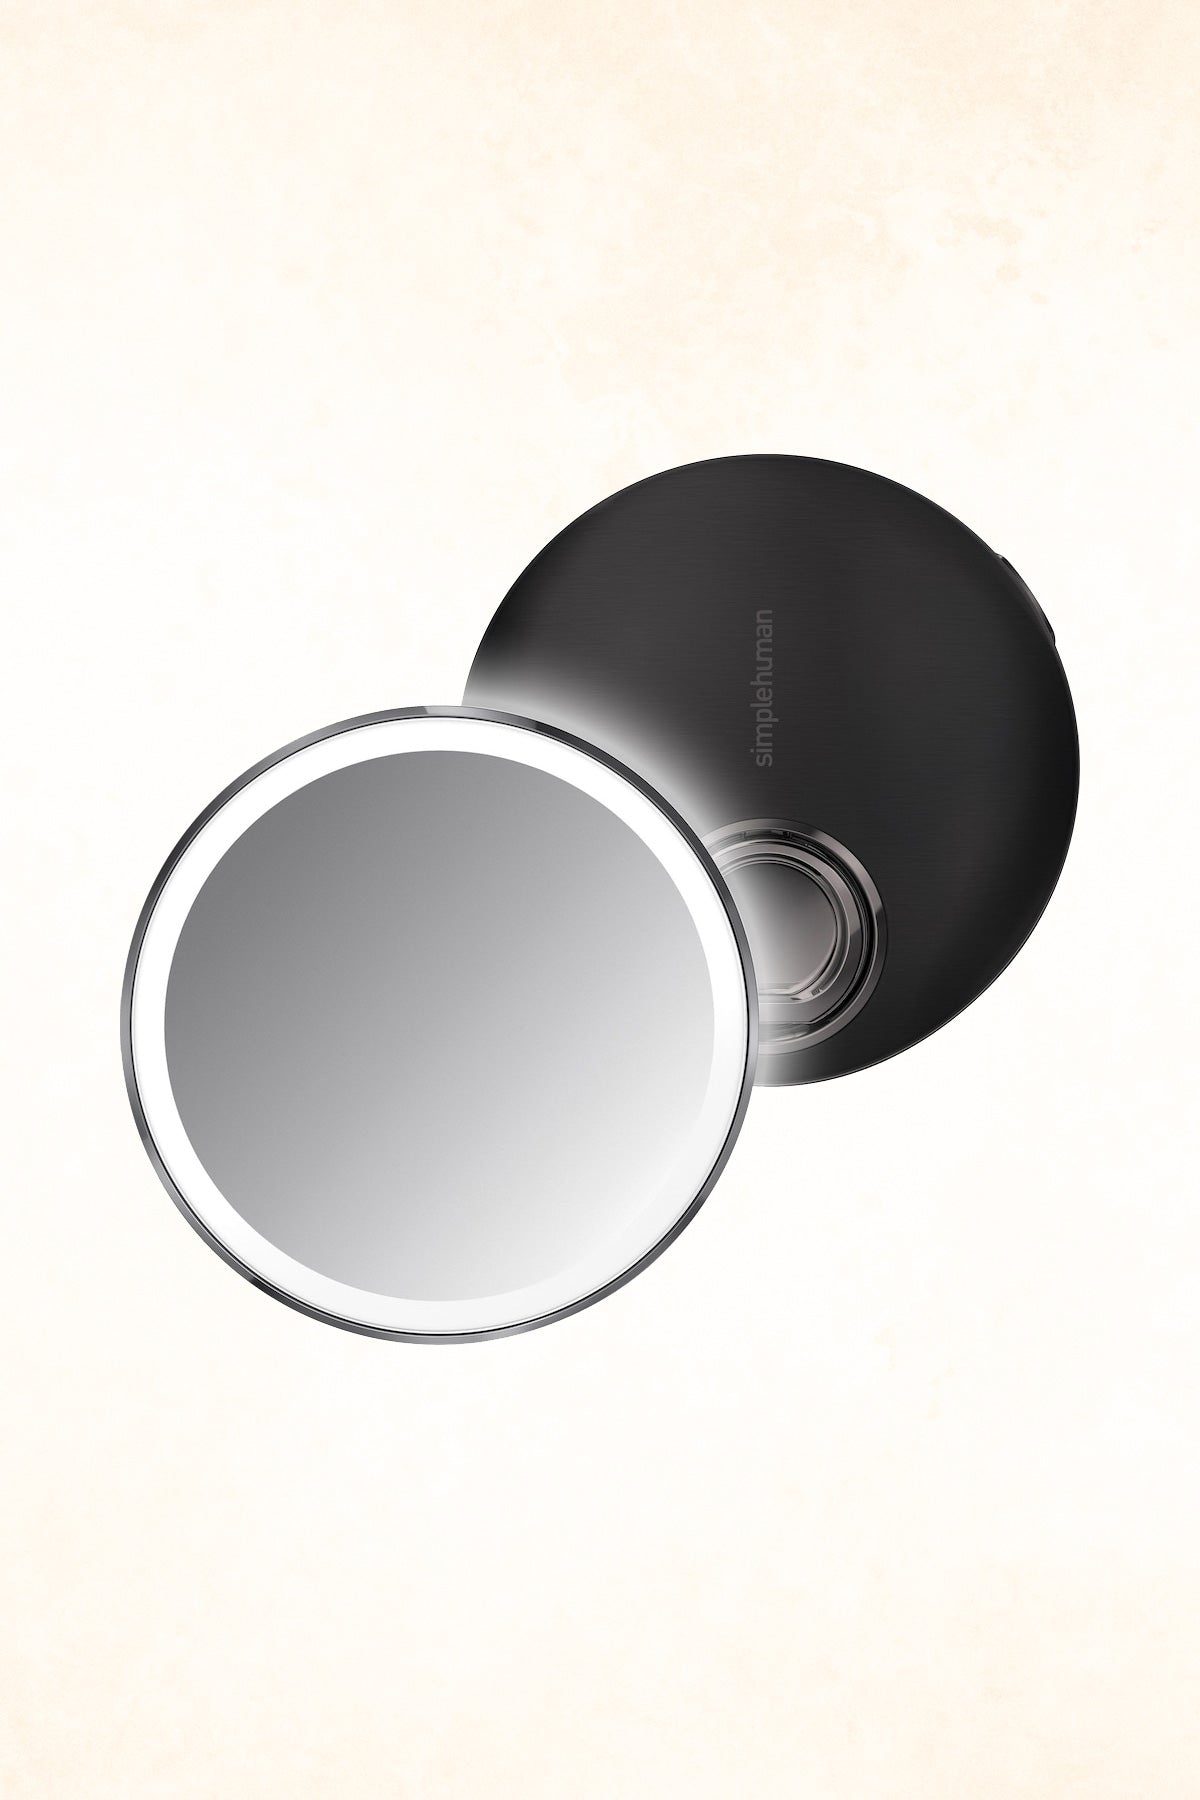 Simplehuman – Sensor Mirror Compact - 3 x Magnification - Sort